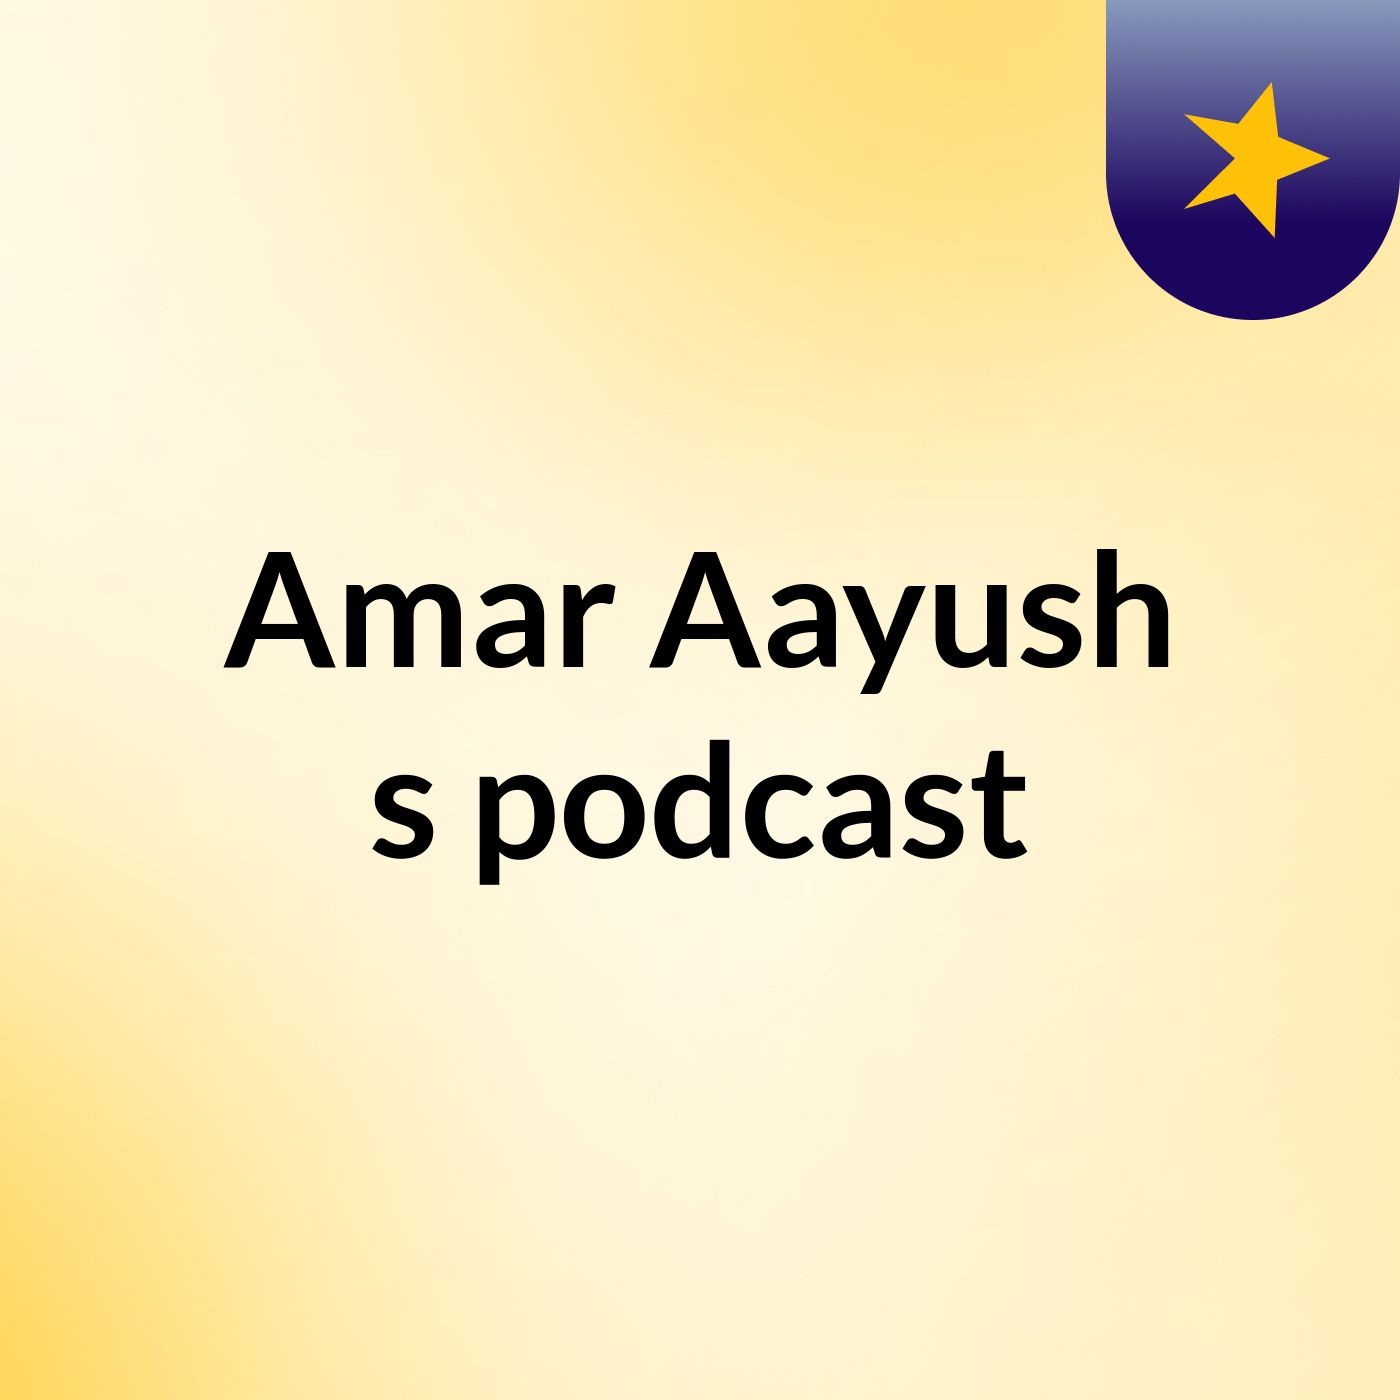 Amar Aayush's podcast